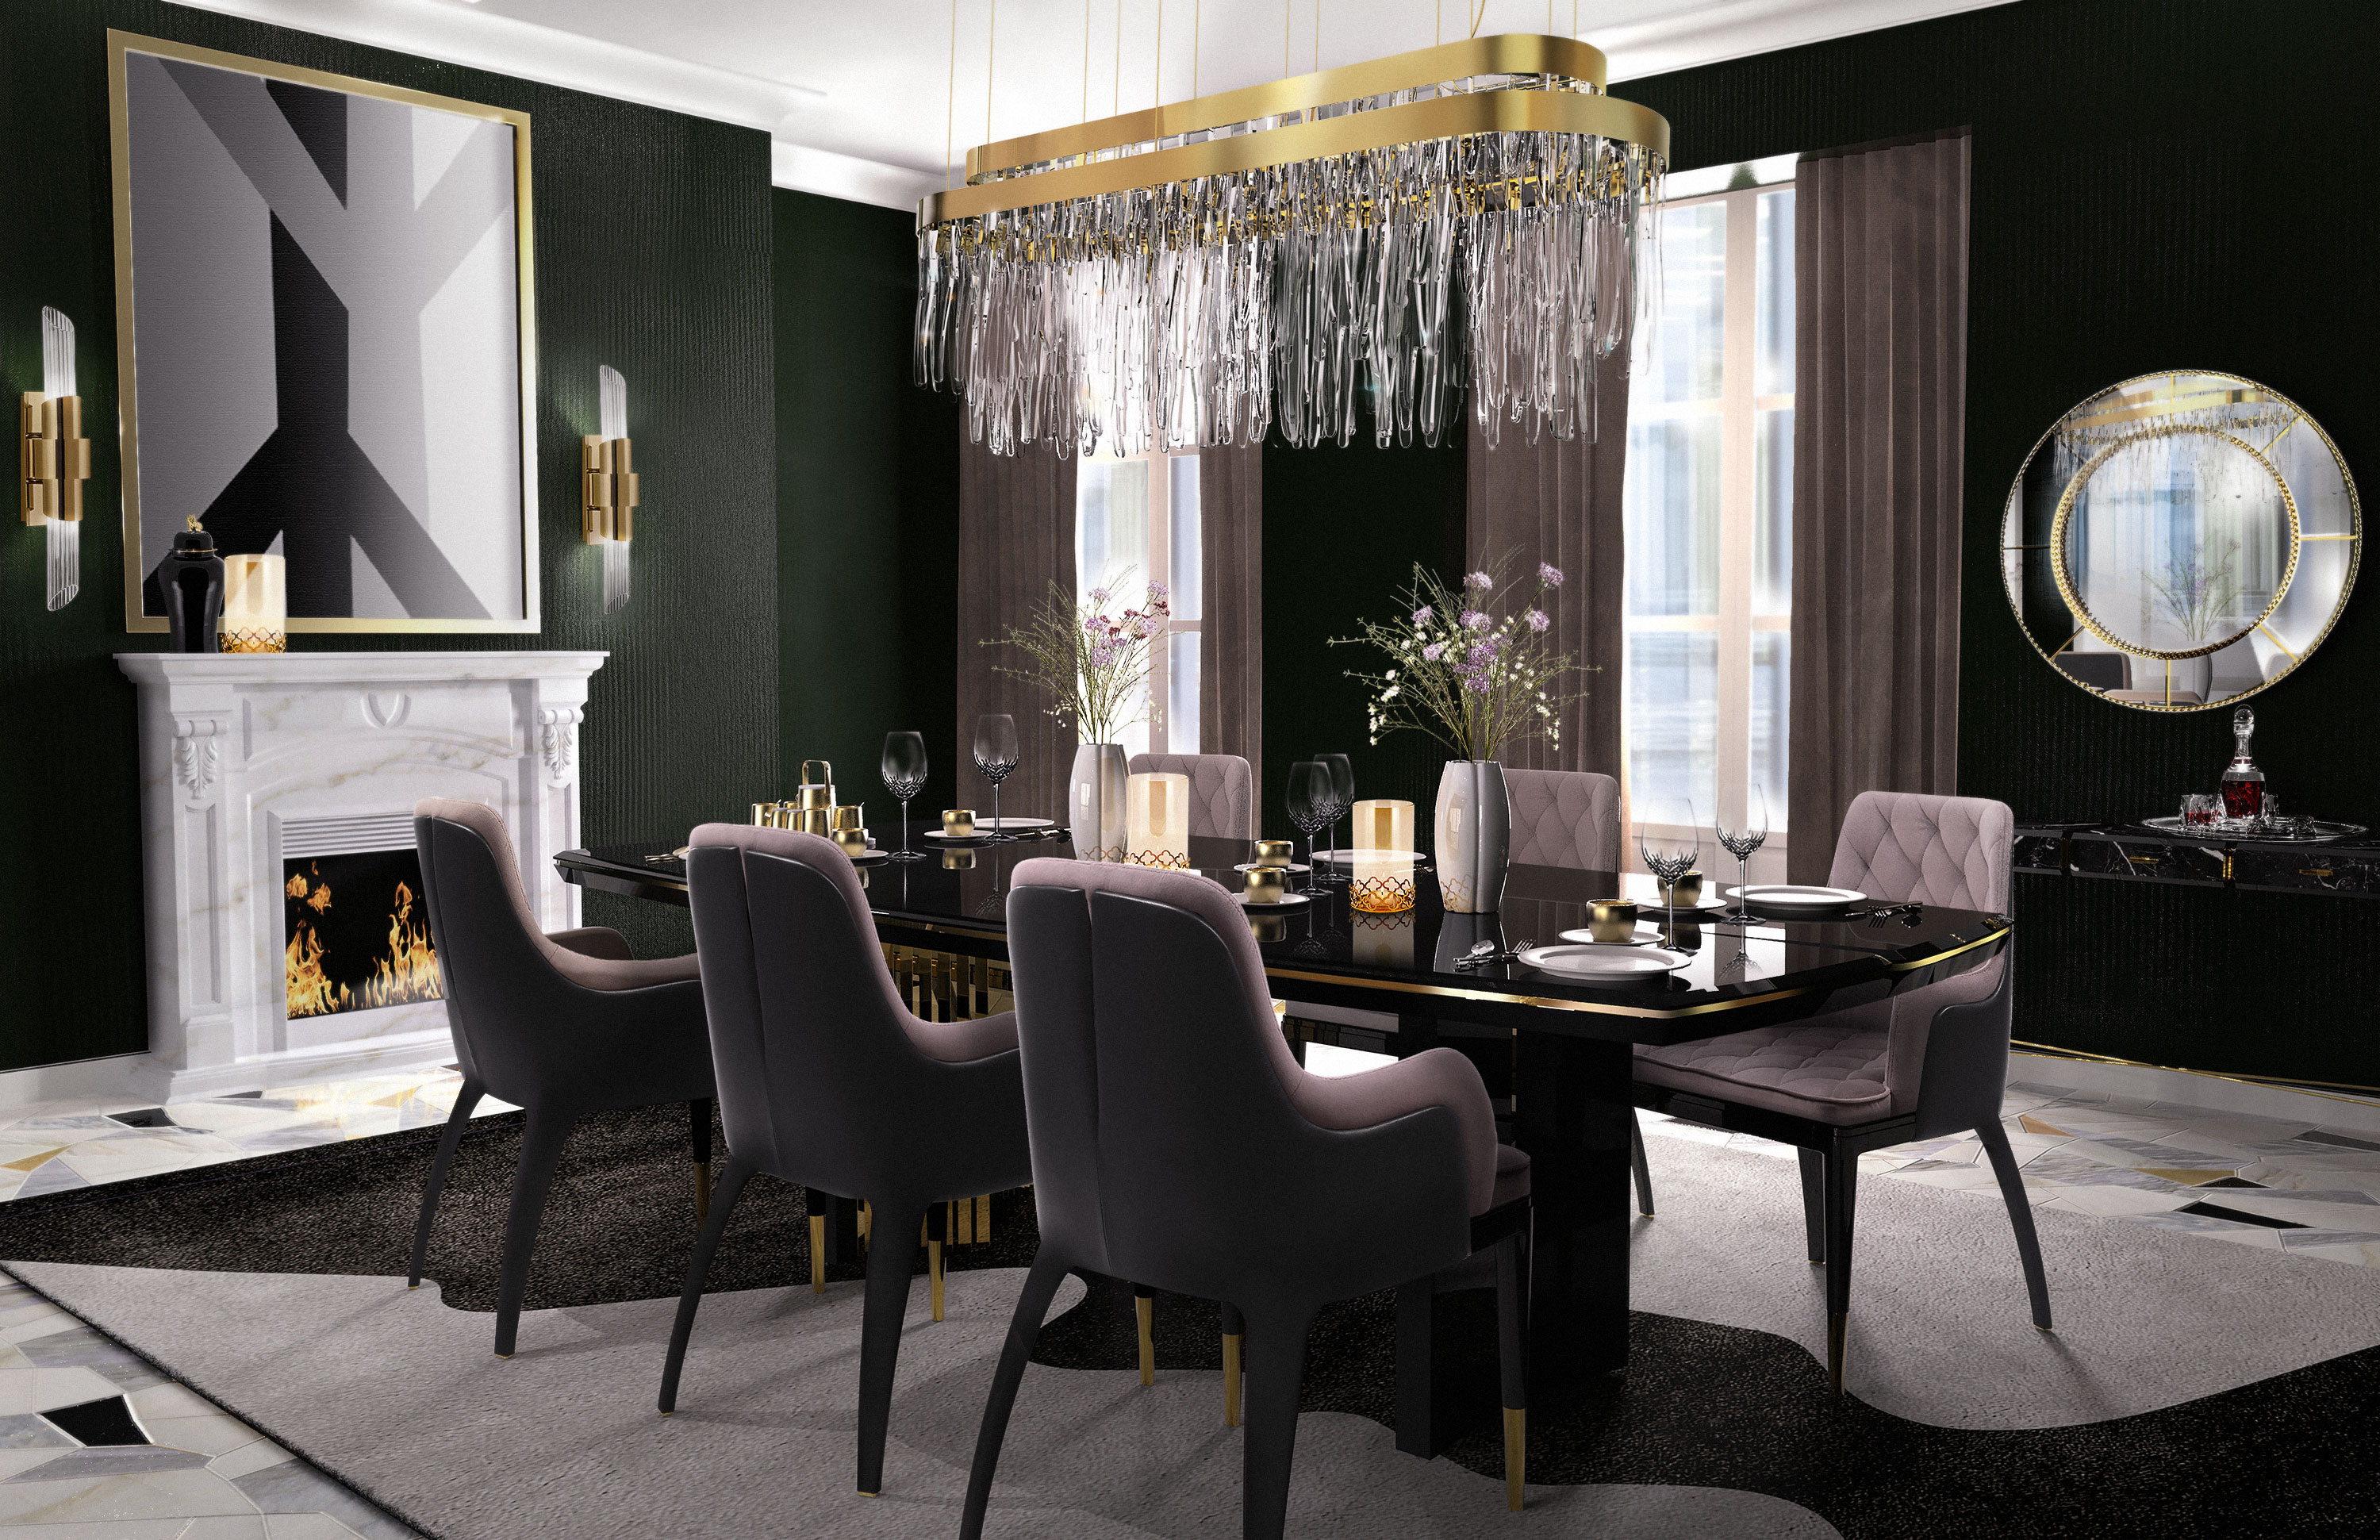 Few interesting ideas to make your Dining room elegant